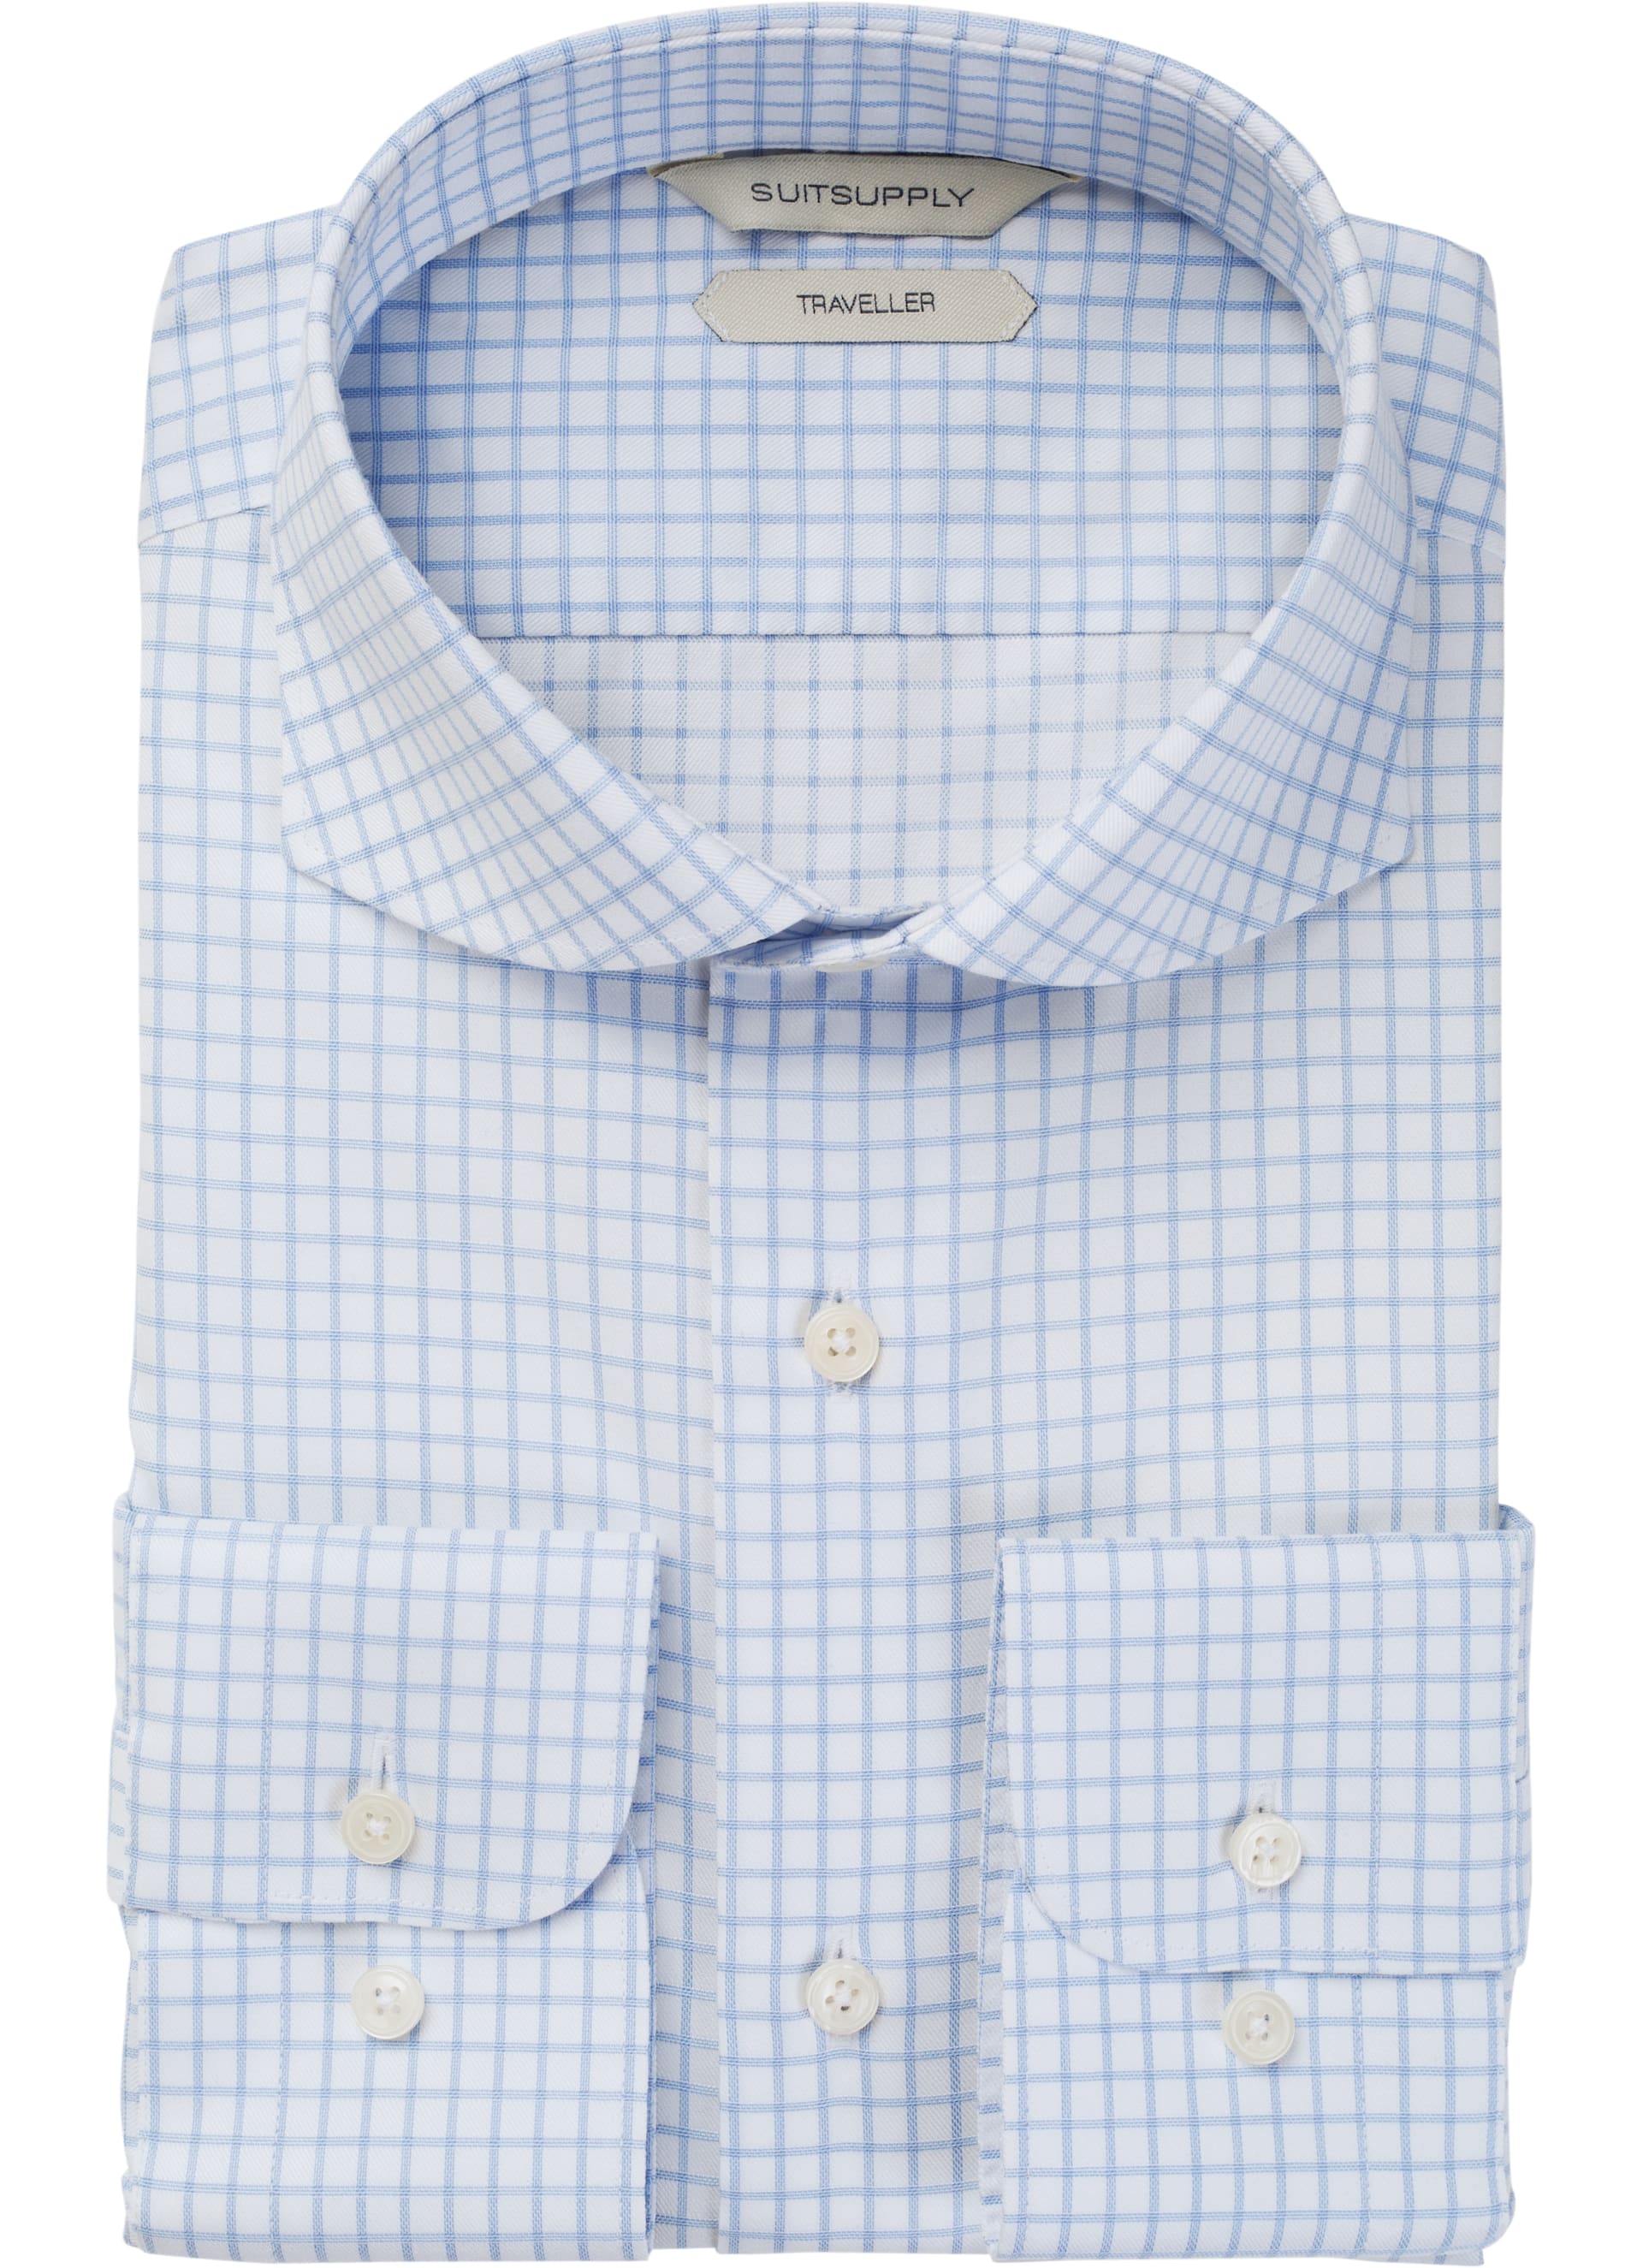 Blue Windowpane Traveller Shirt Single Cuff H9007u | Suitsupply Online ...